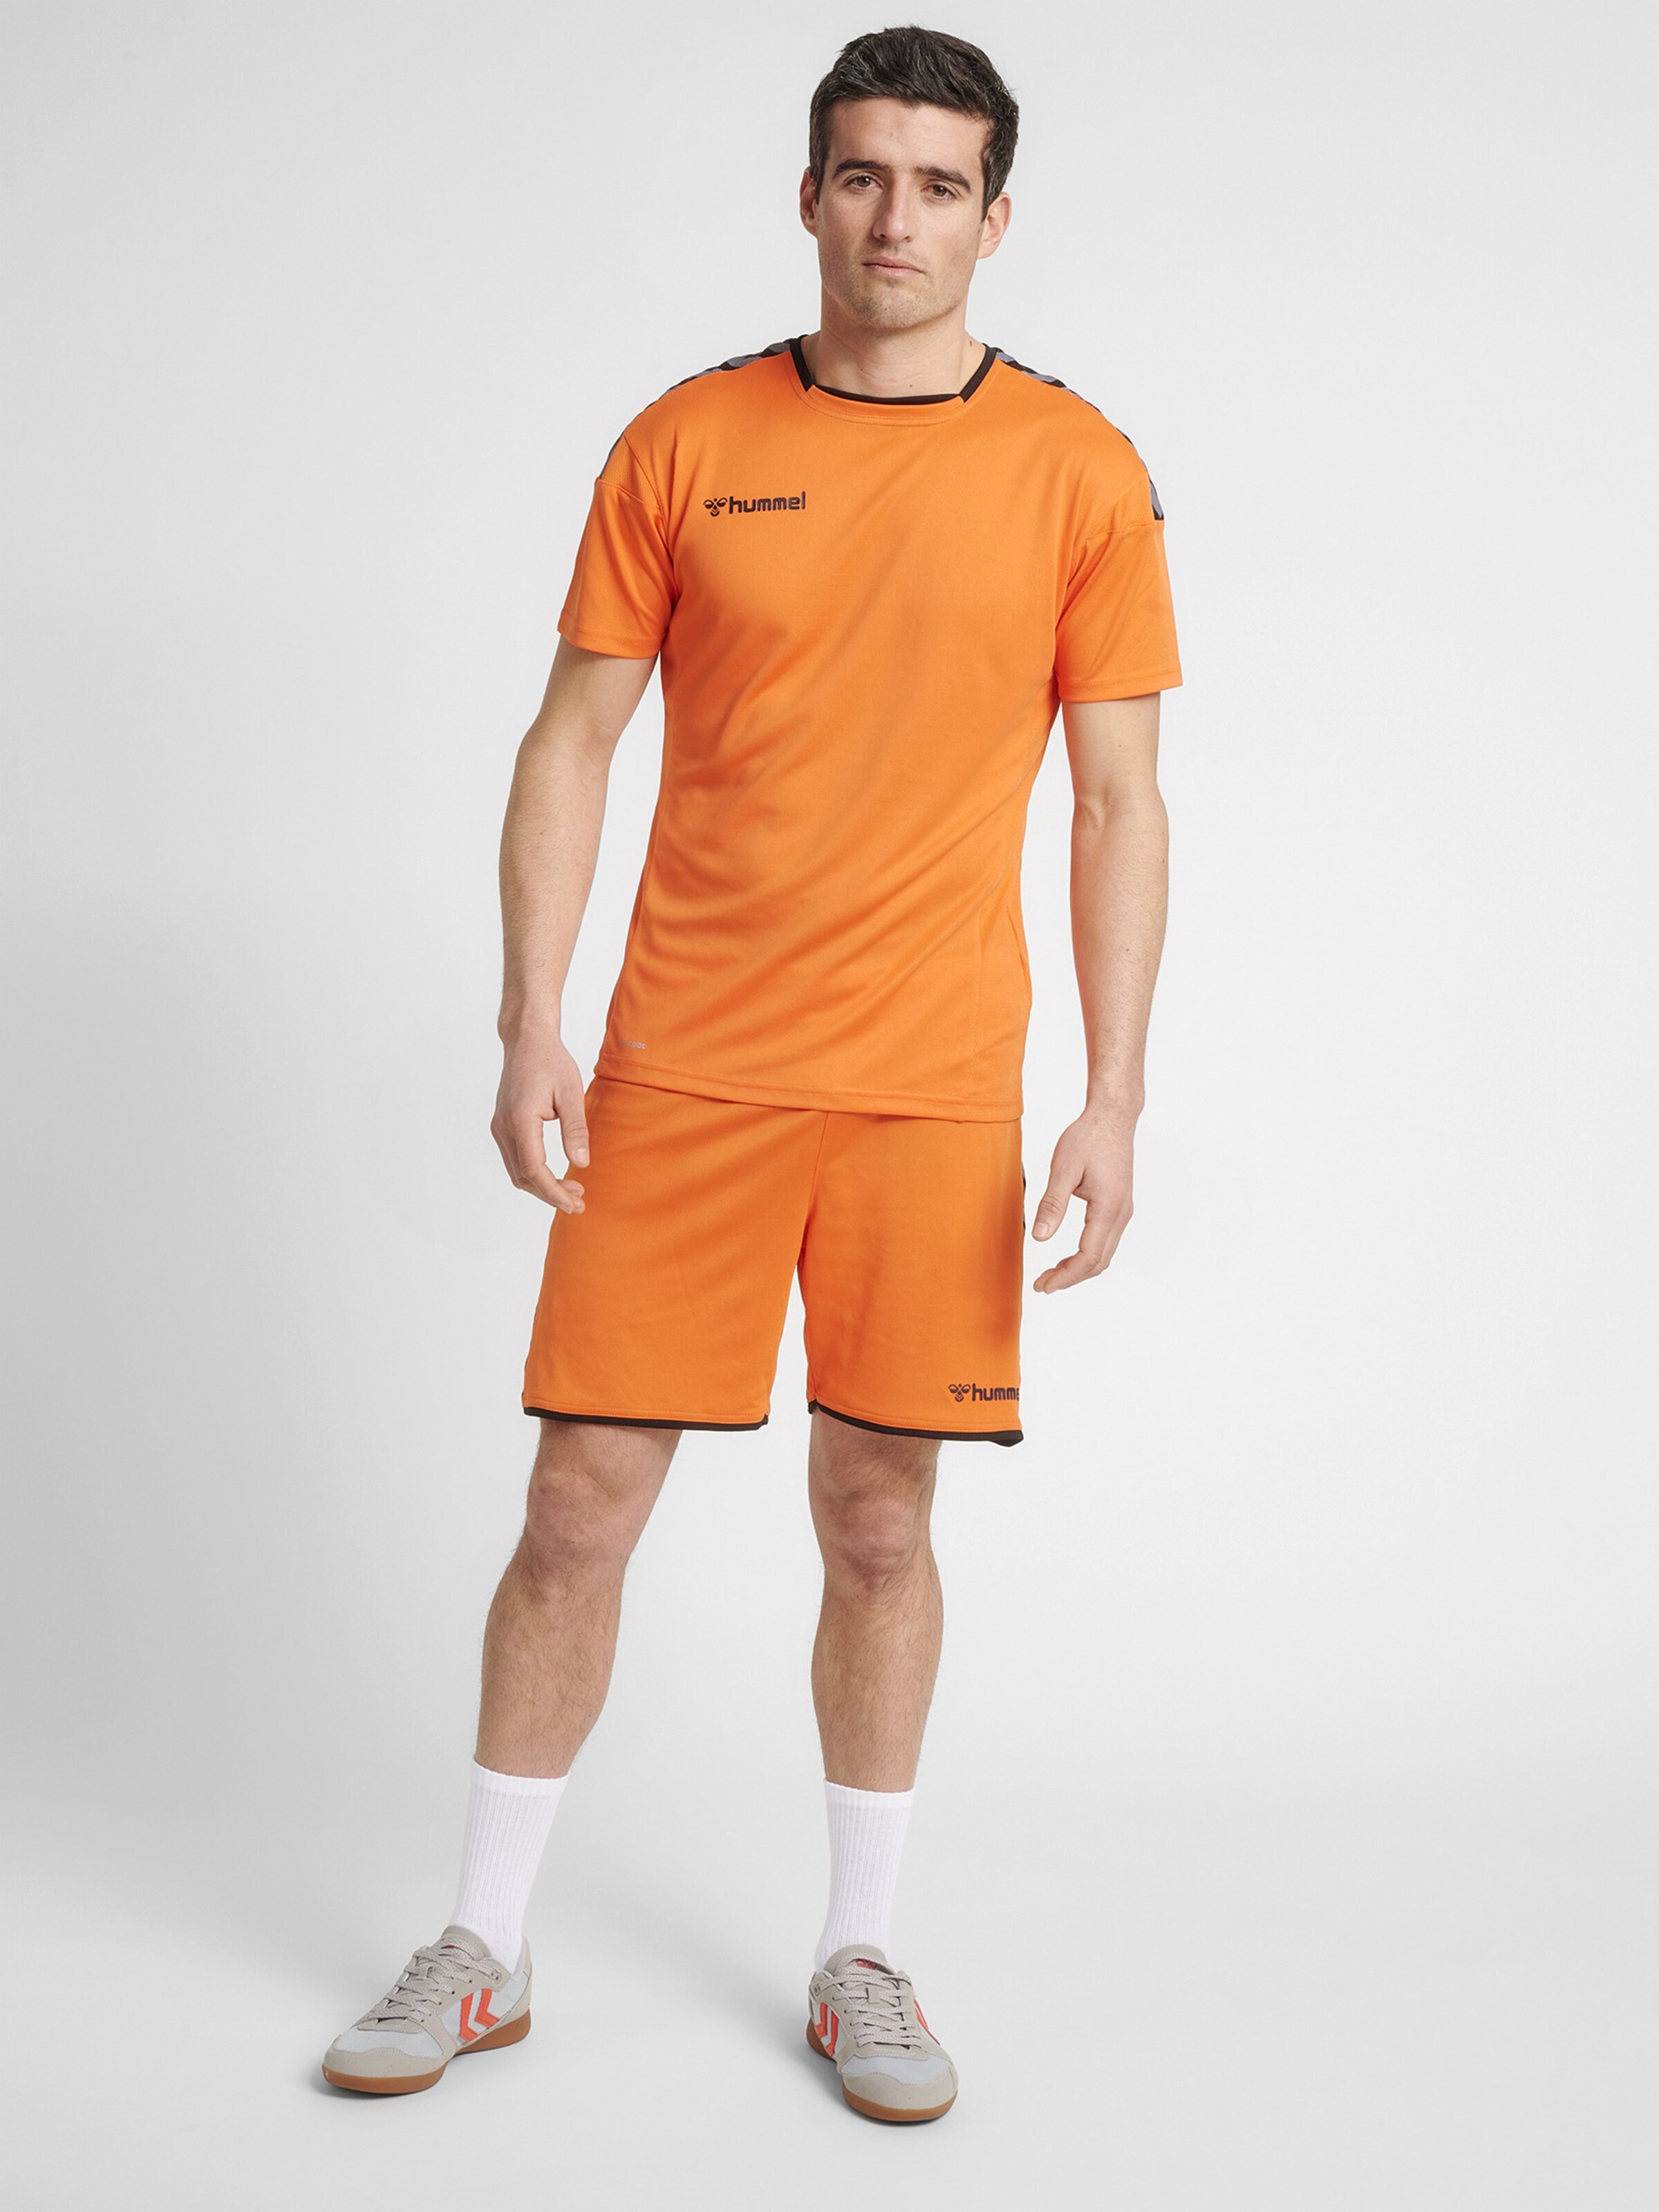 Männer Sportarten Hummel Trainingsshirt in Orange - RF70819